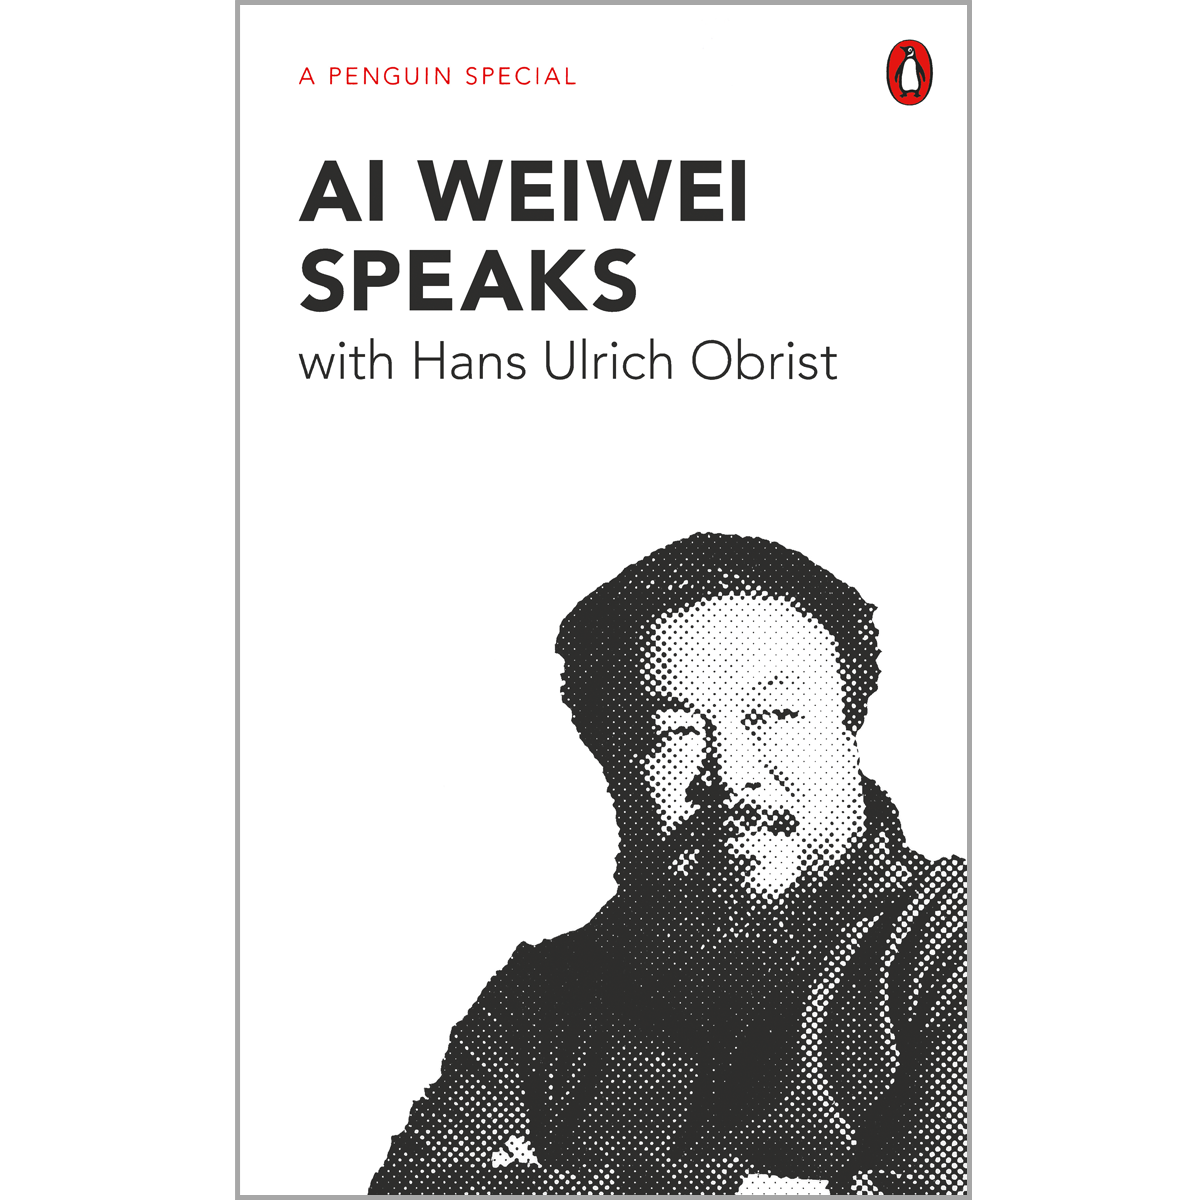 Ai Weiwei speaks  with Hans Ulrich Obrist